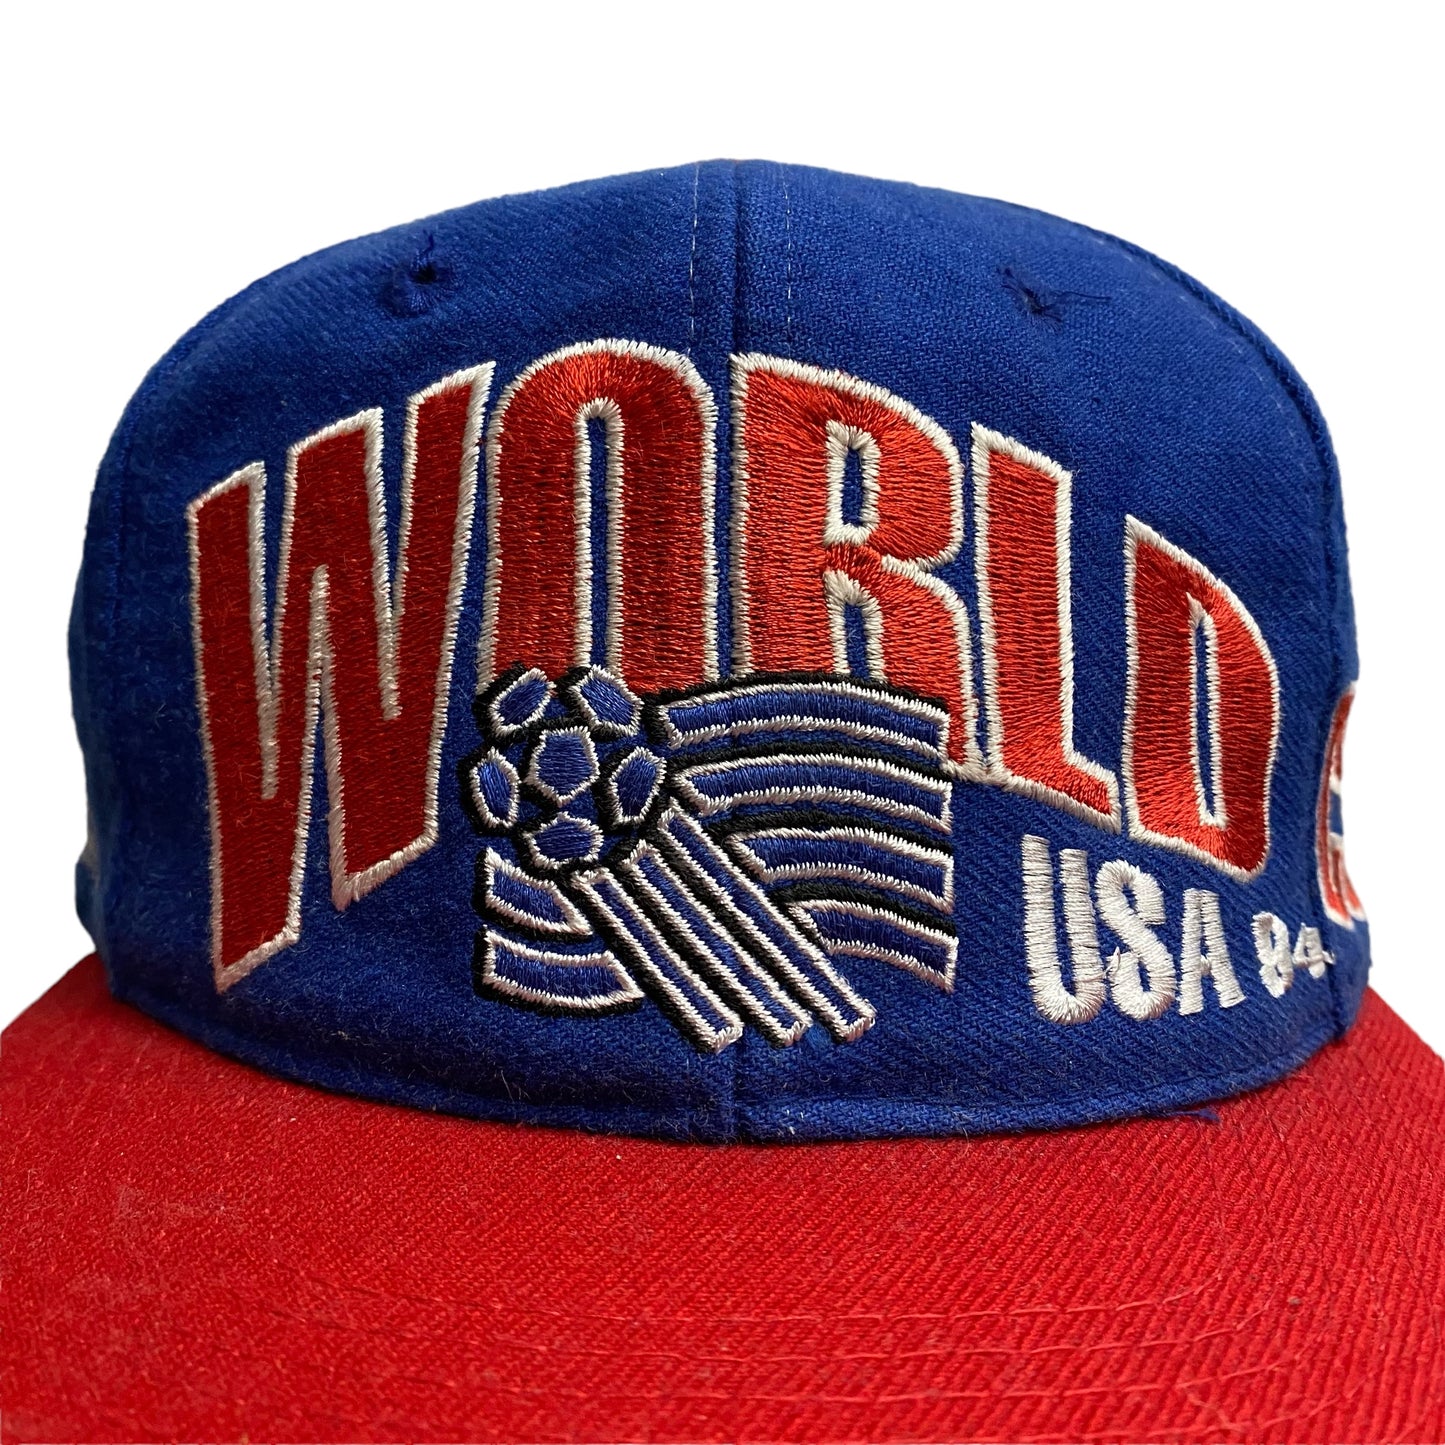 Vintage Team USA World Cup 1994 Blue & Red Snap Back Hat